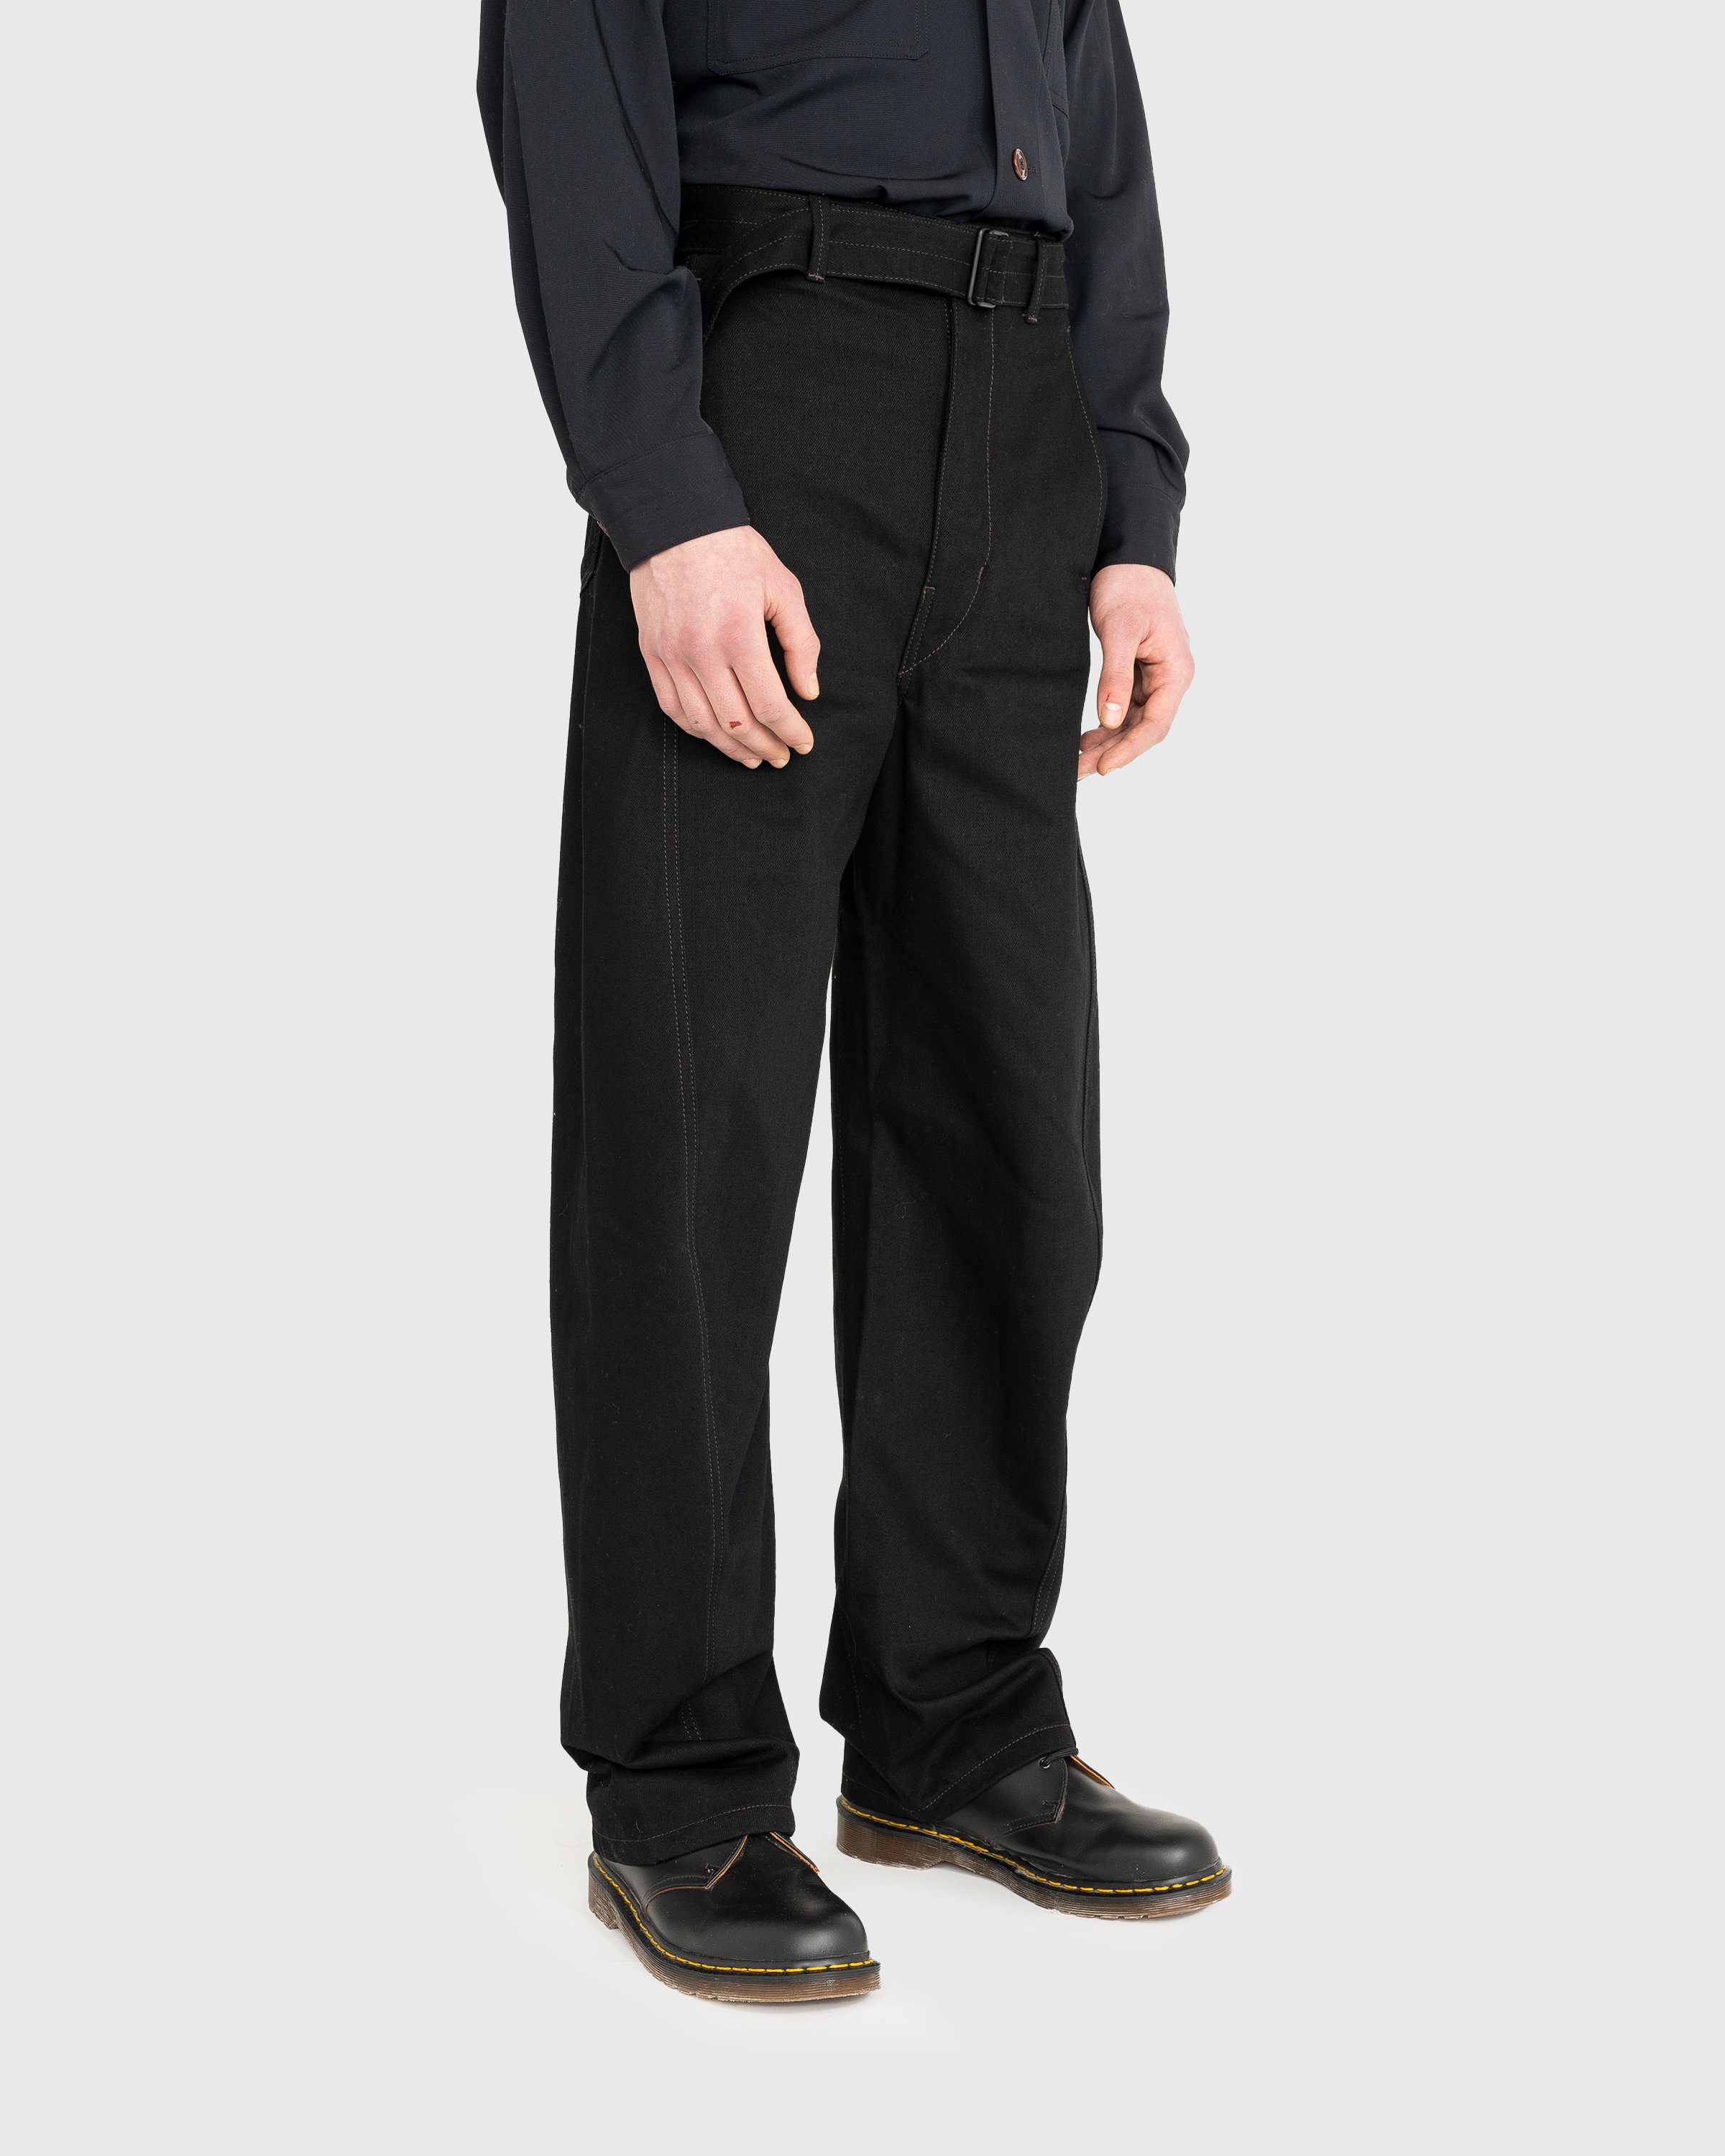 Lemaire - Twisted Belted Pants Black - Clothing - Black - Image 4